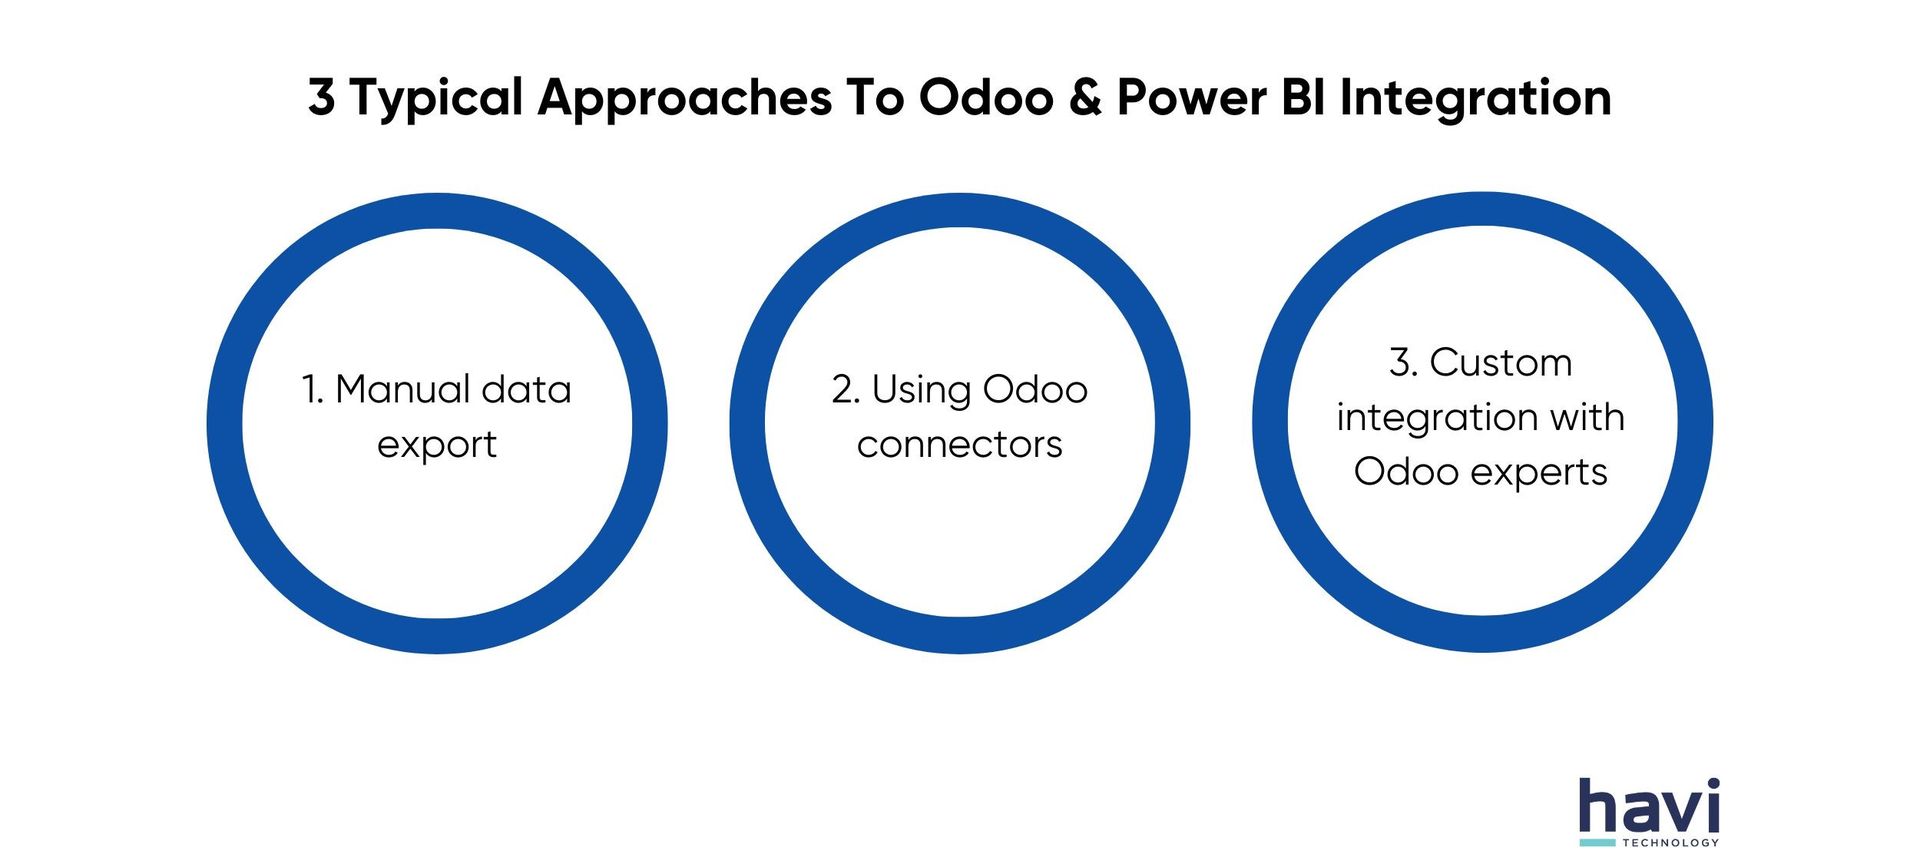 odoo integration with power bi Havi Technology Pty Ltd